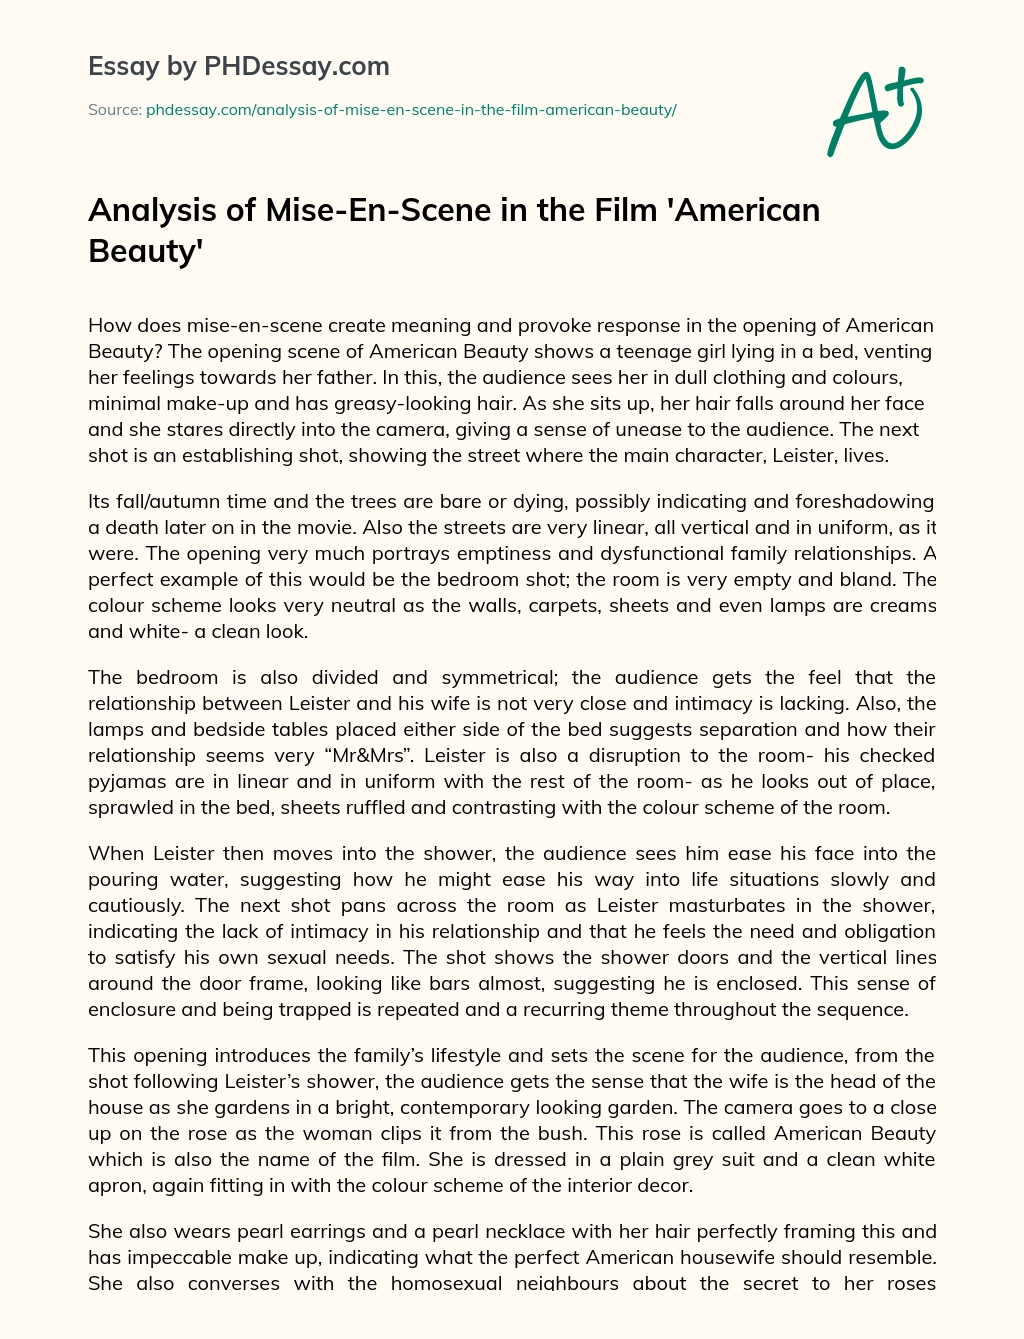 Analysis of Mise-En-Scene in the Film ‘American Beauty’ essay